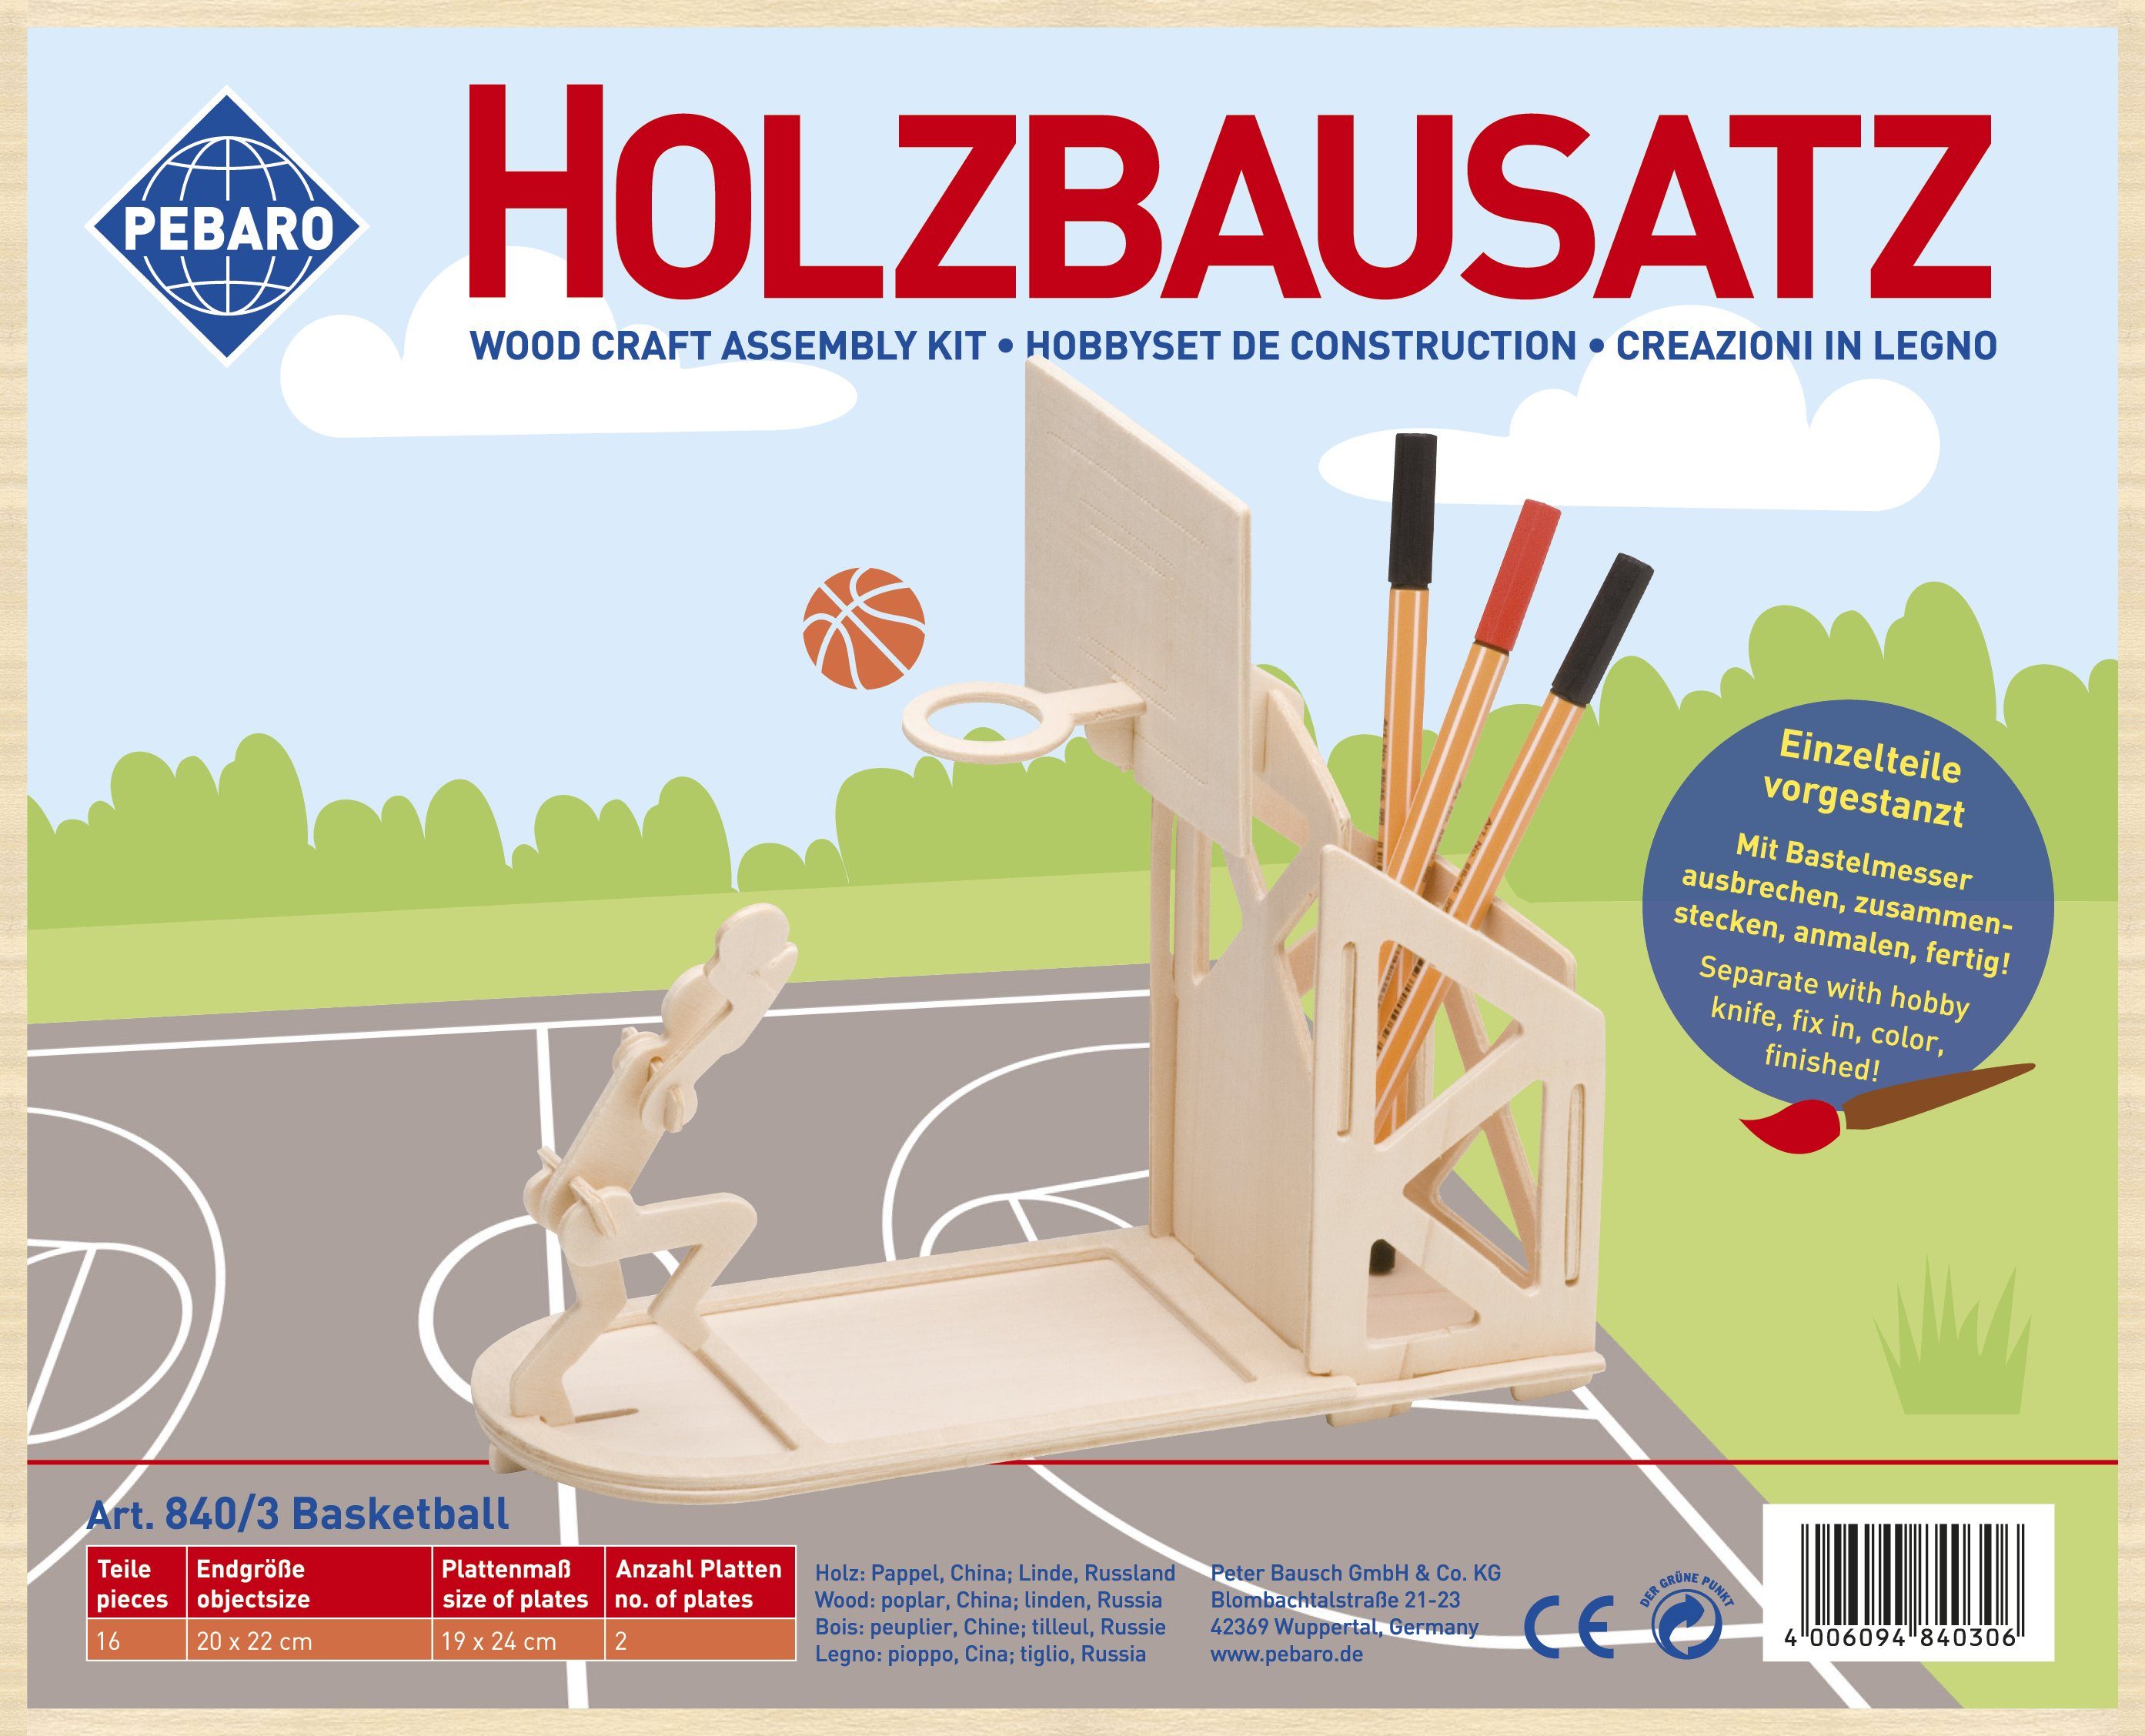 Pebaro 3D-Puzzle Holzbausatz Stiftehalter Basketball, 840/3, Puzzleteile 16